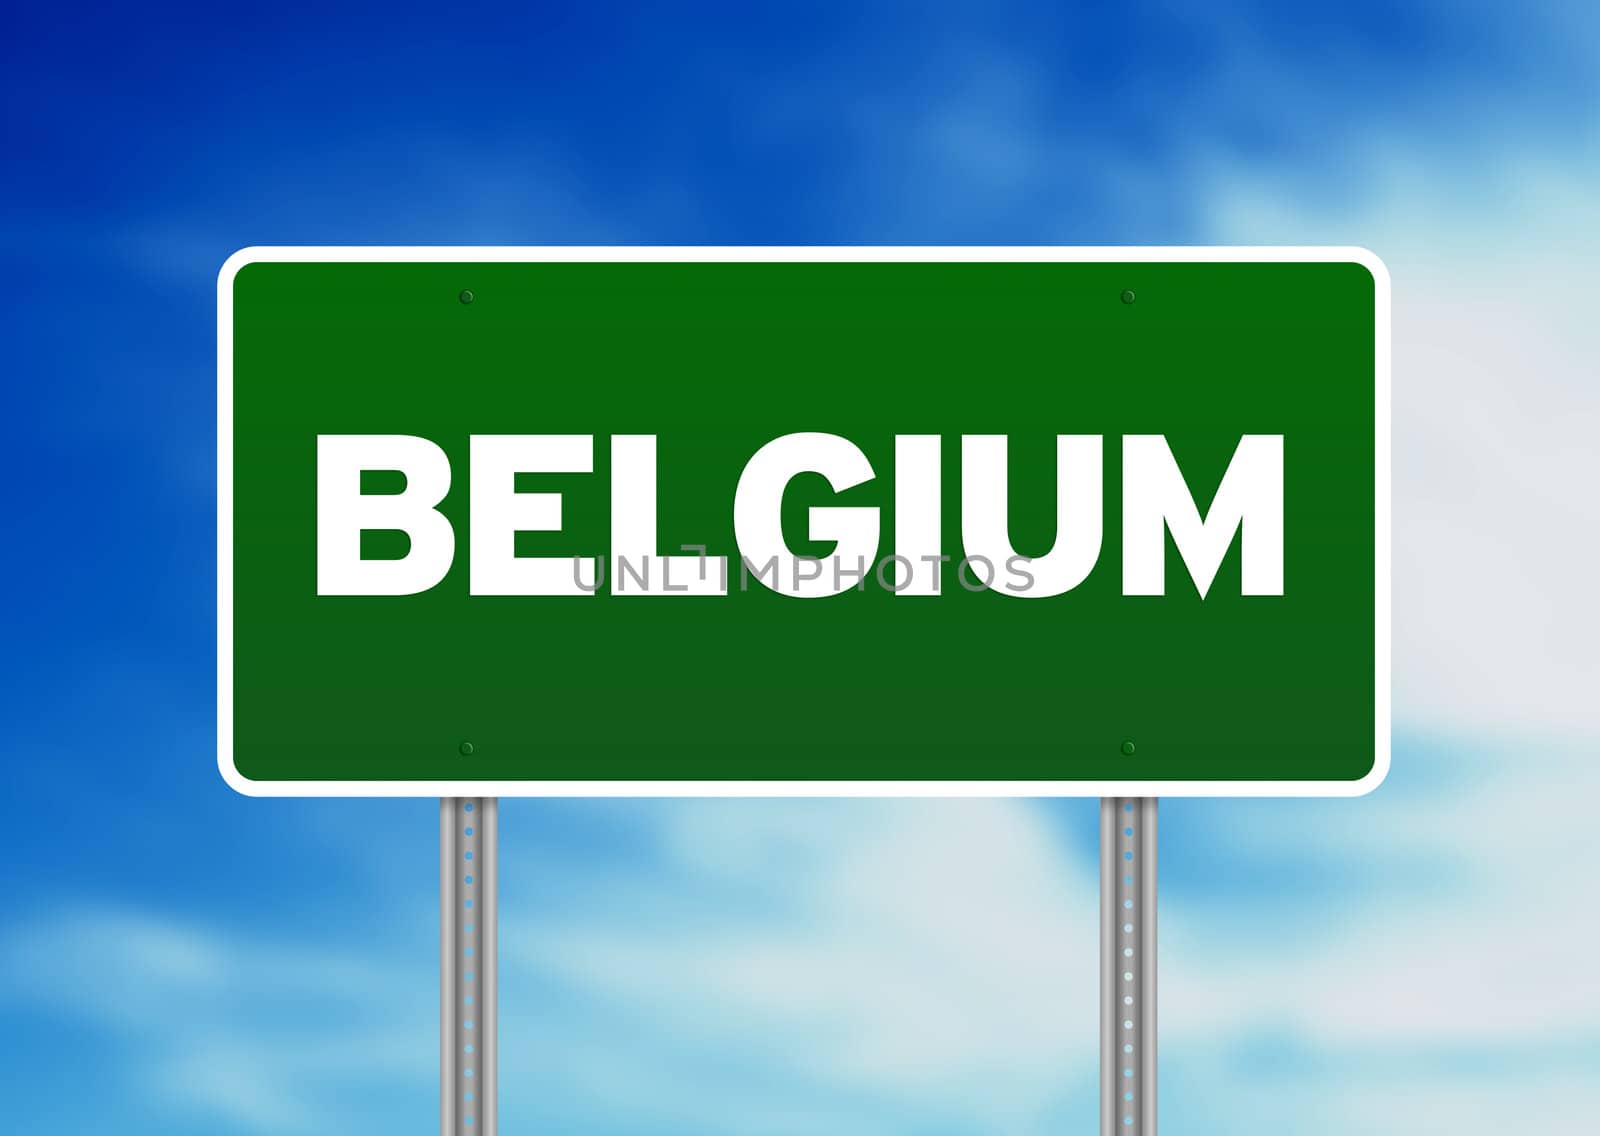 Green Belgium highway sign on Cloud Background. 